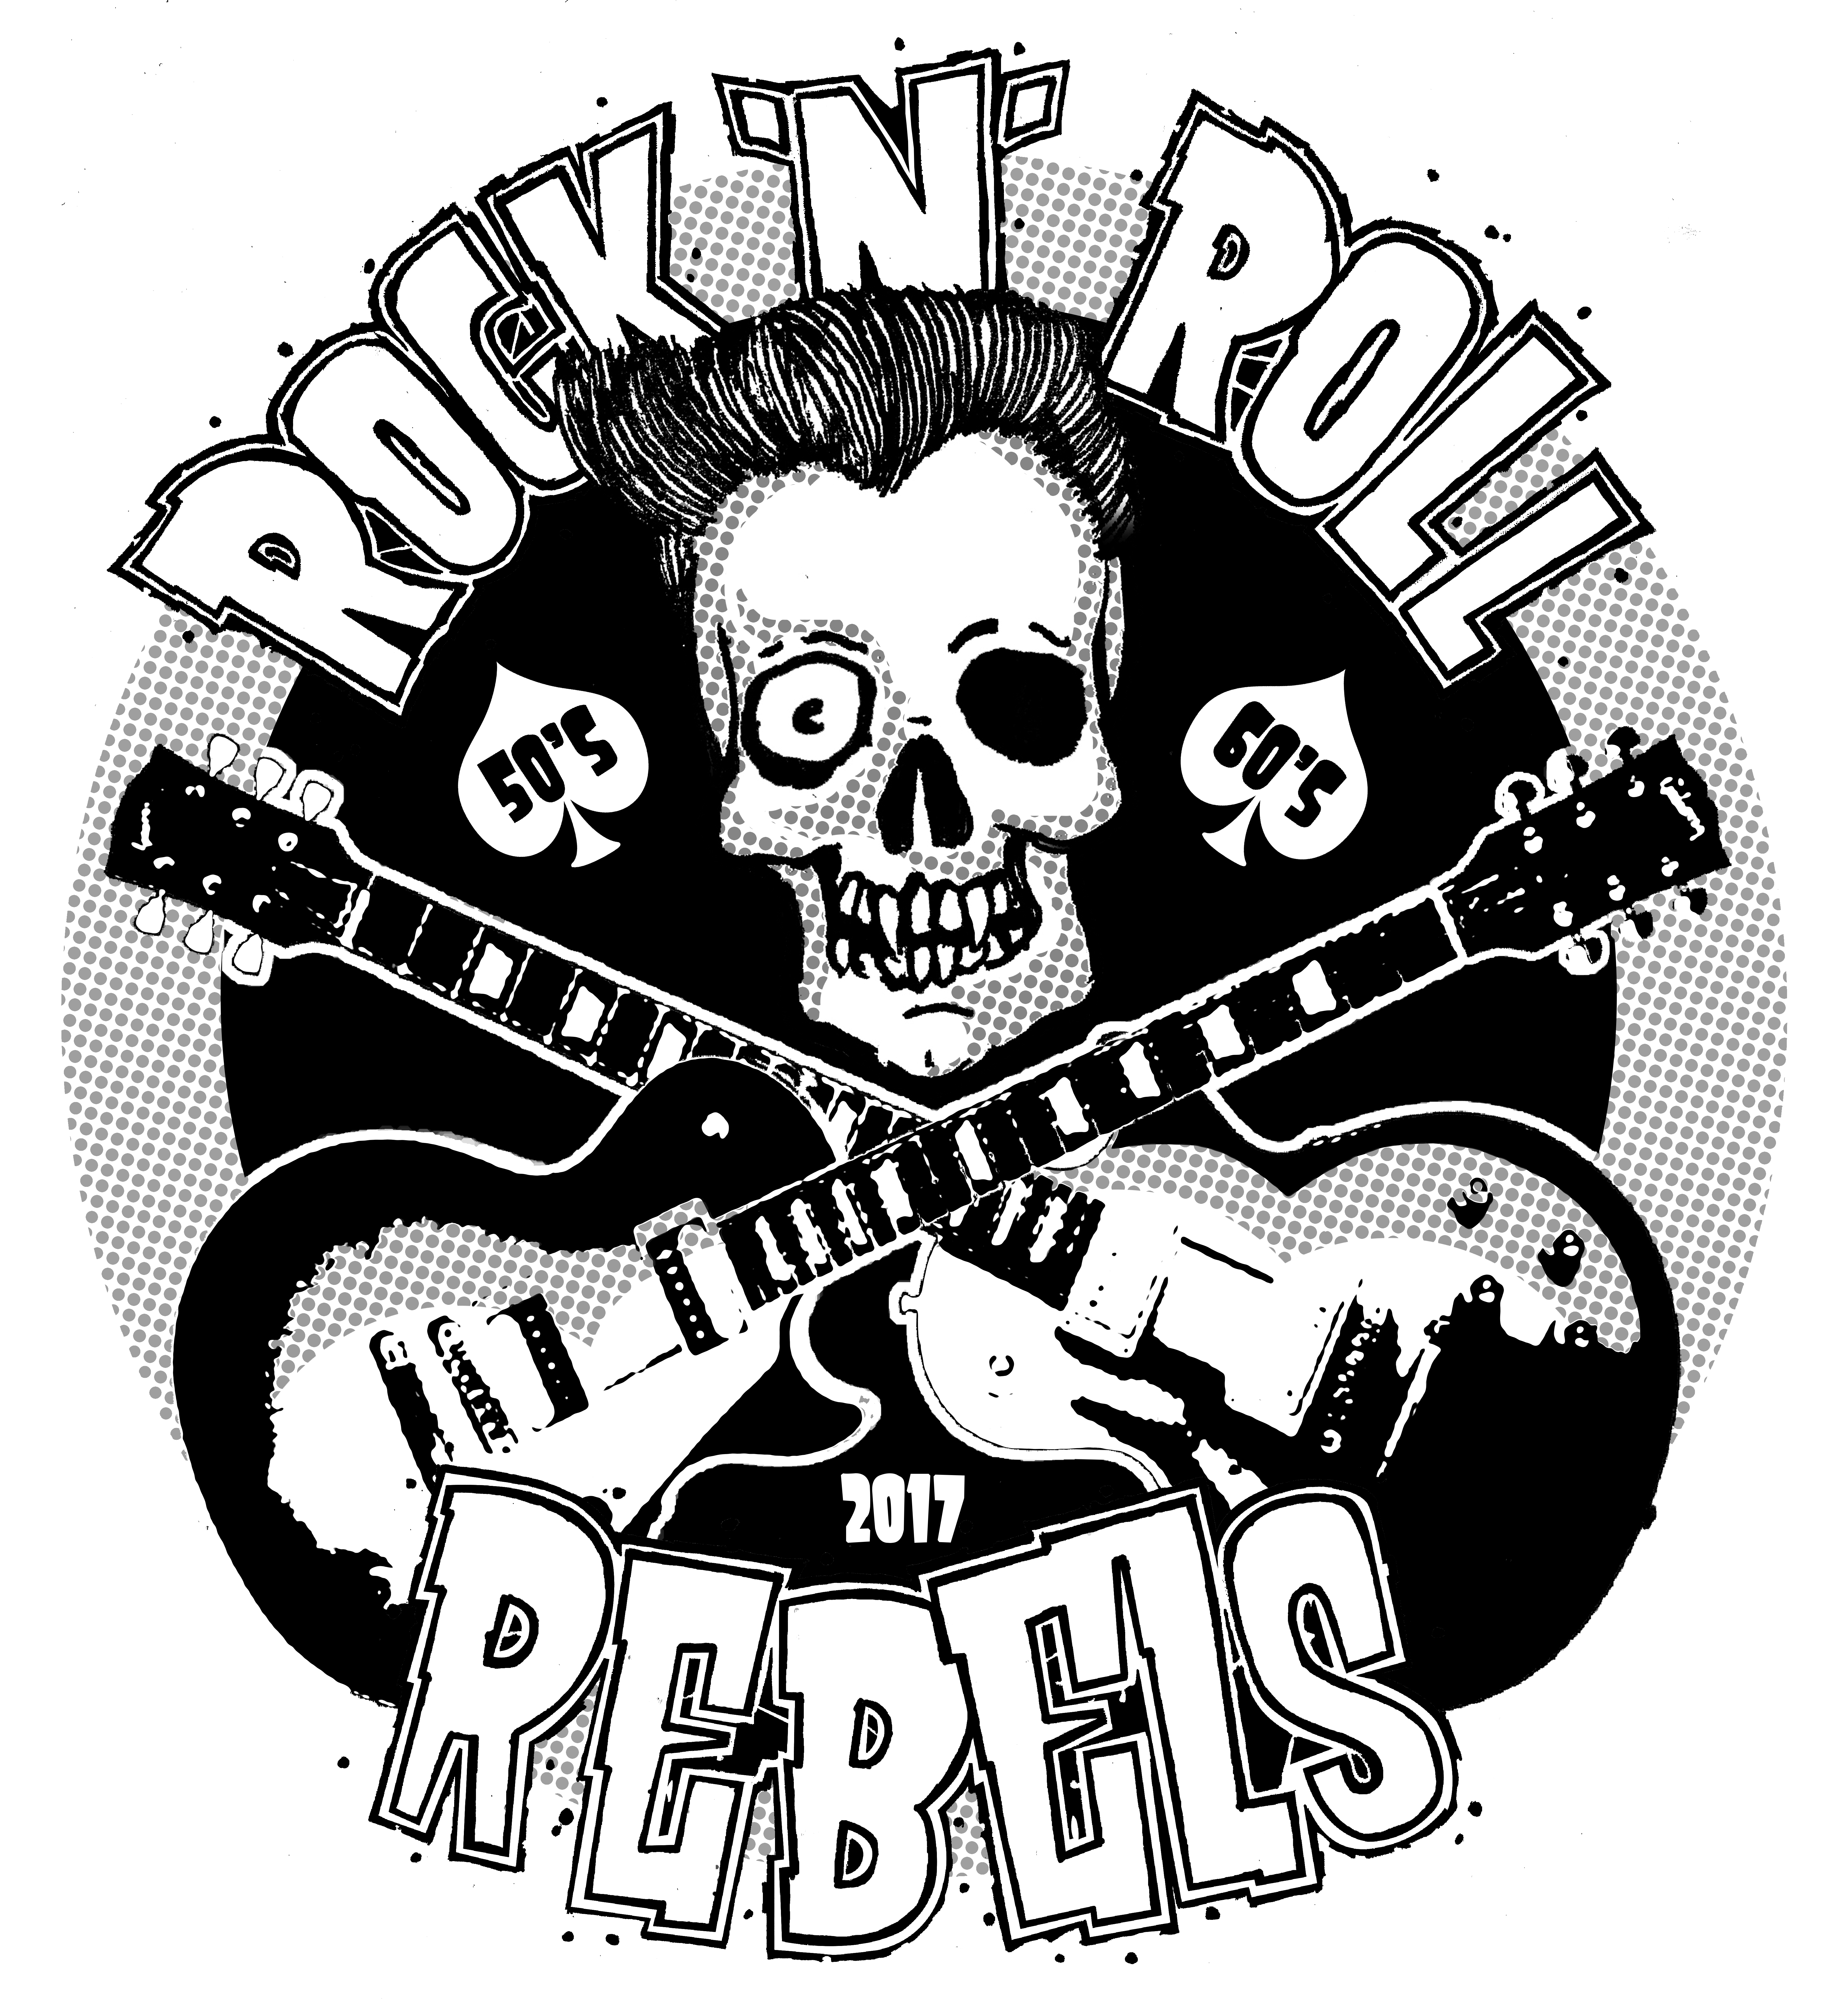 I rock n roll. Рок-н-ролл. Логотипы рок групп. Рок иллюстрации.